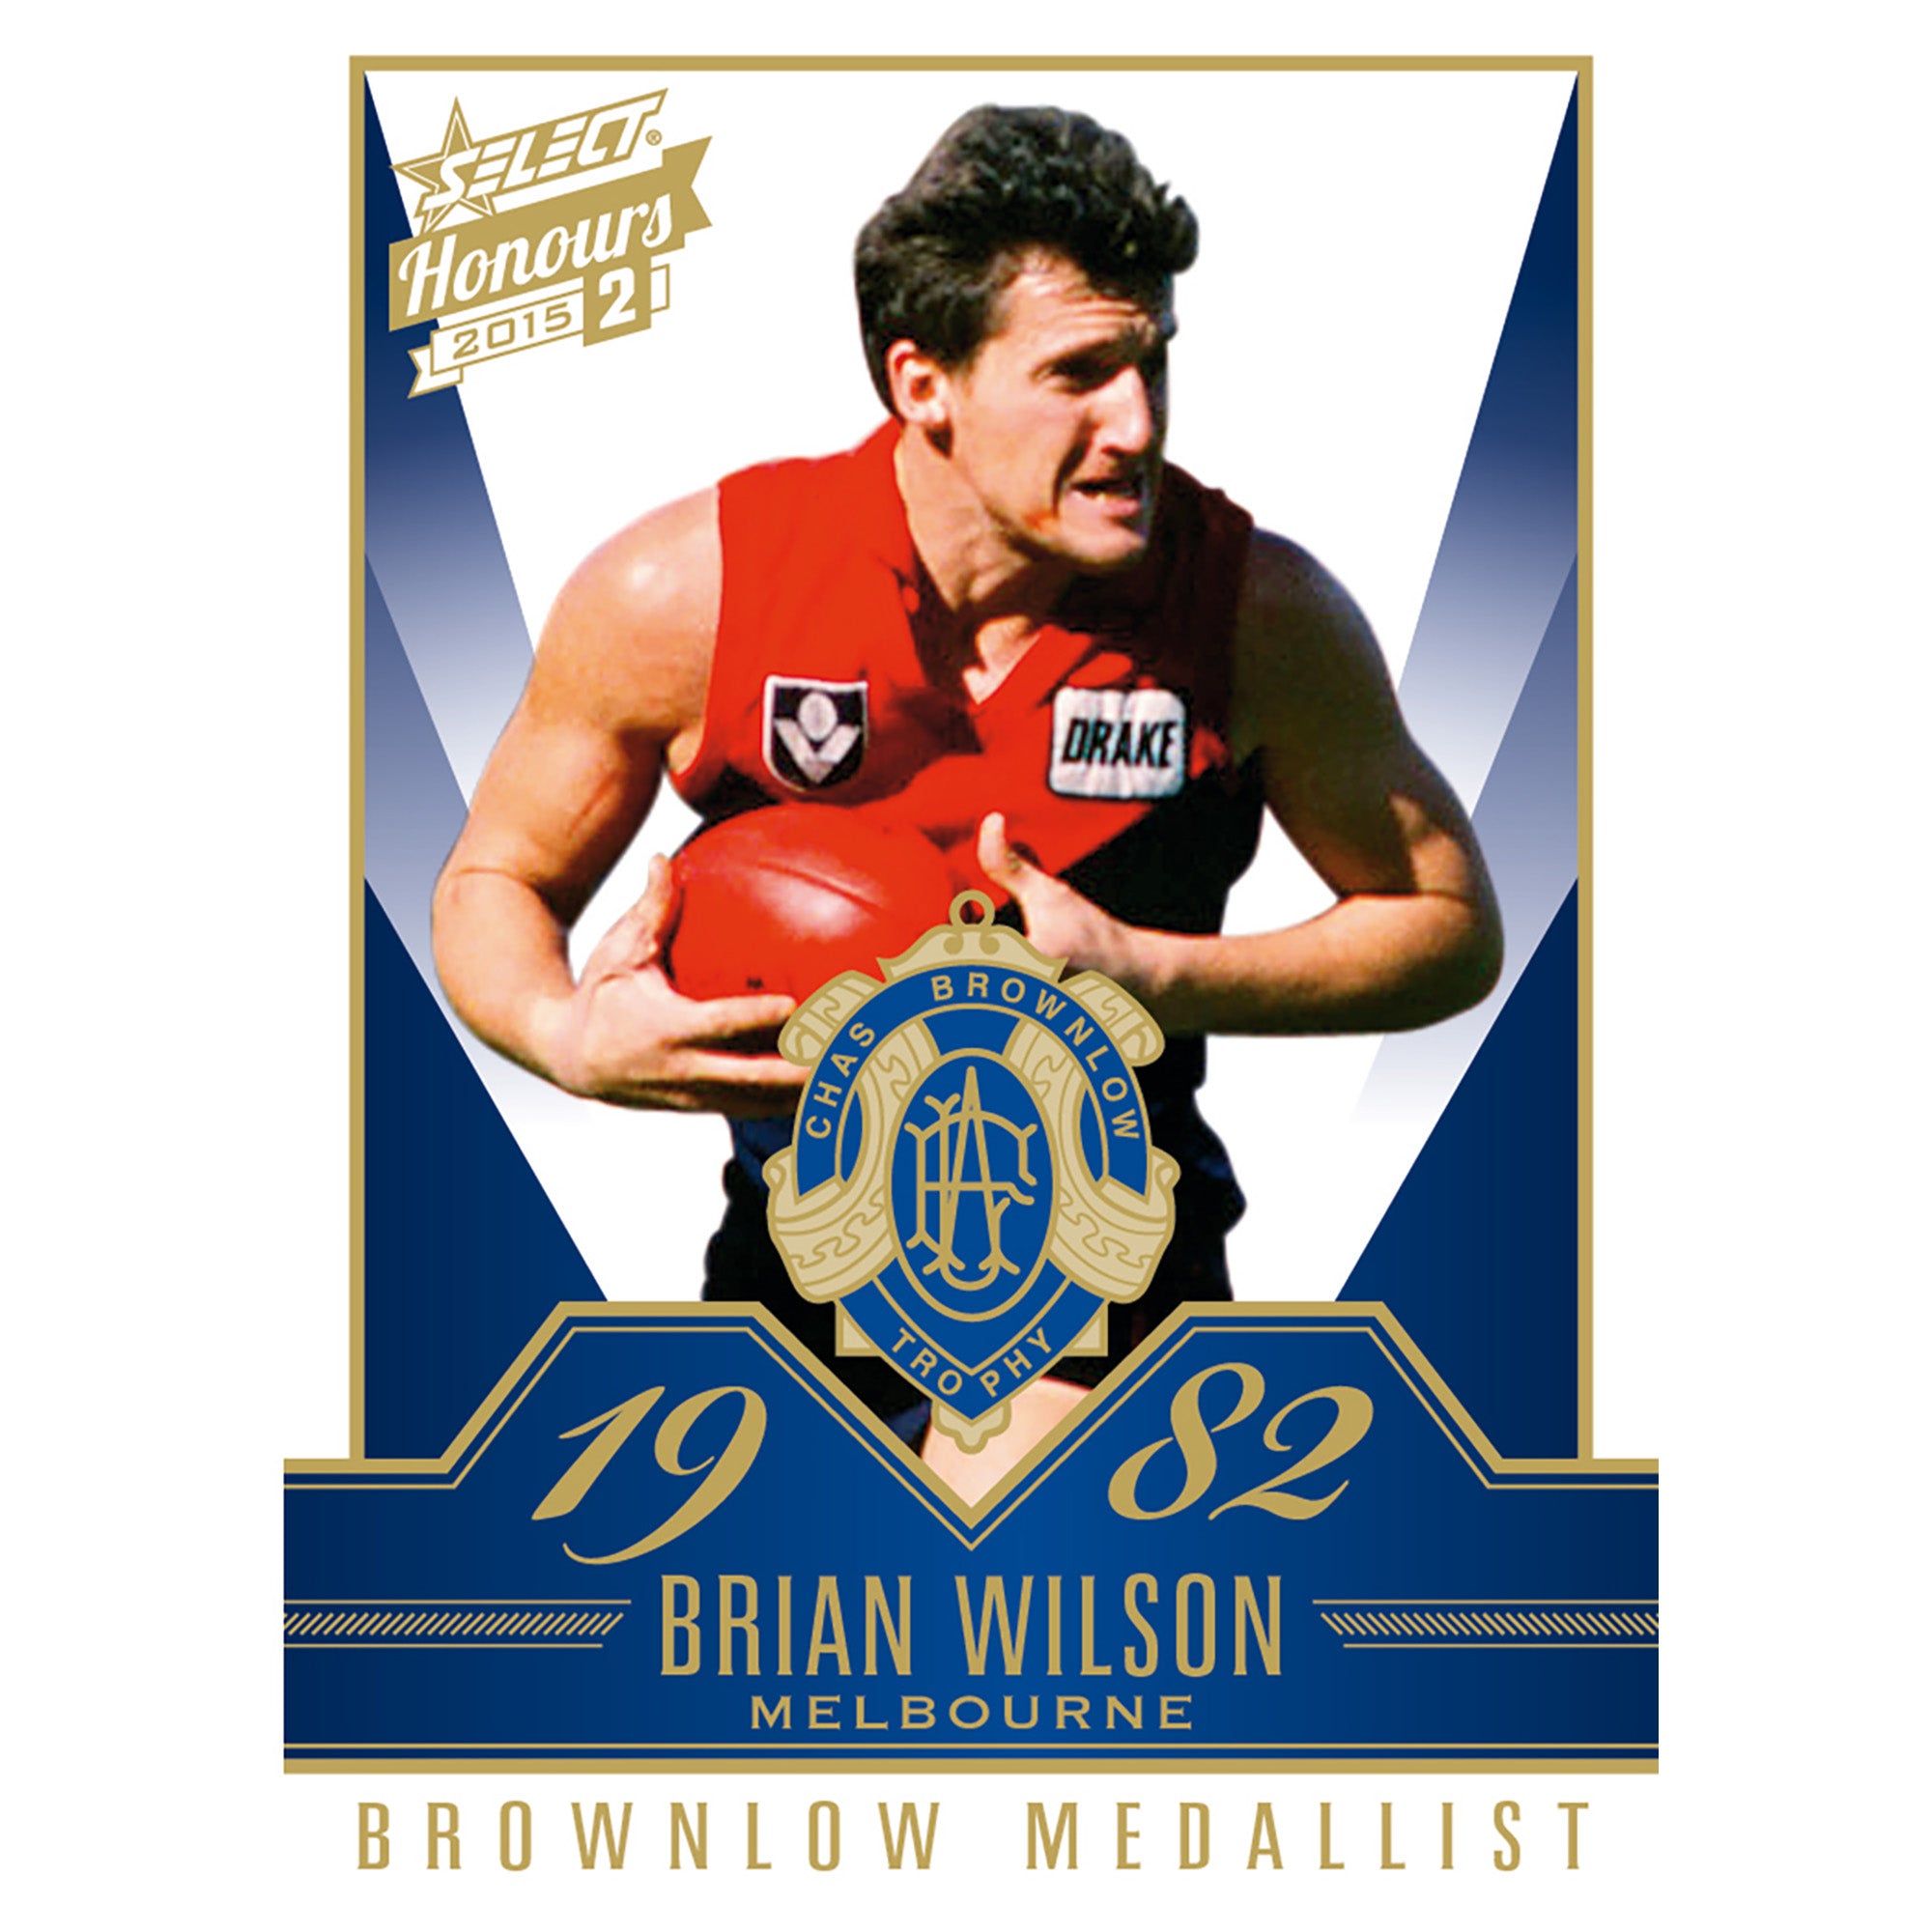 AFL Select Australia 2015 Select Honours 2 - Brownlow Gallery Brian Wilson Melbourne BG82